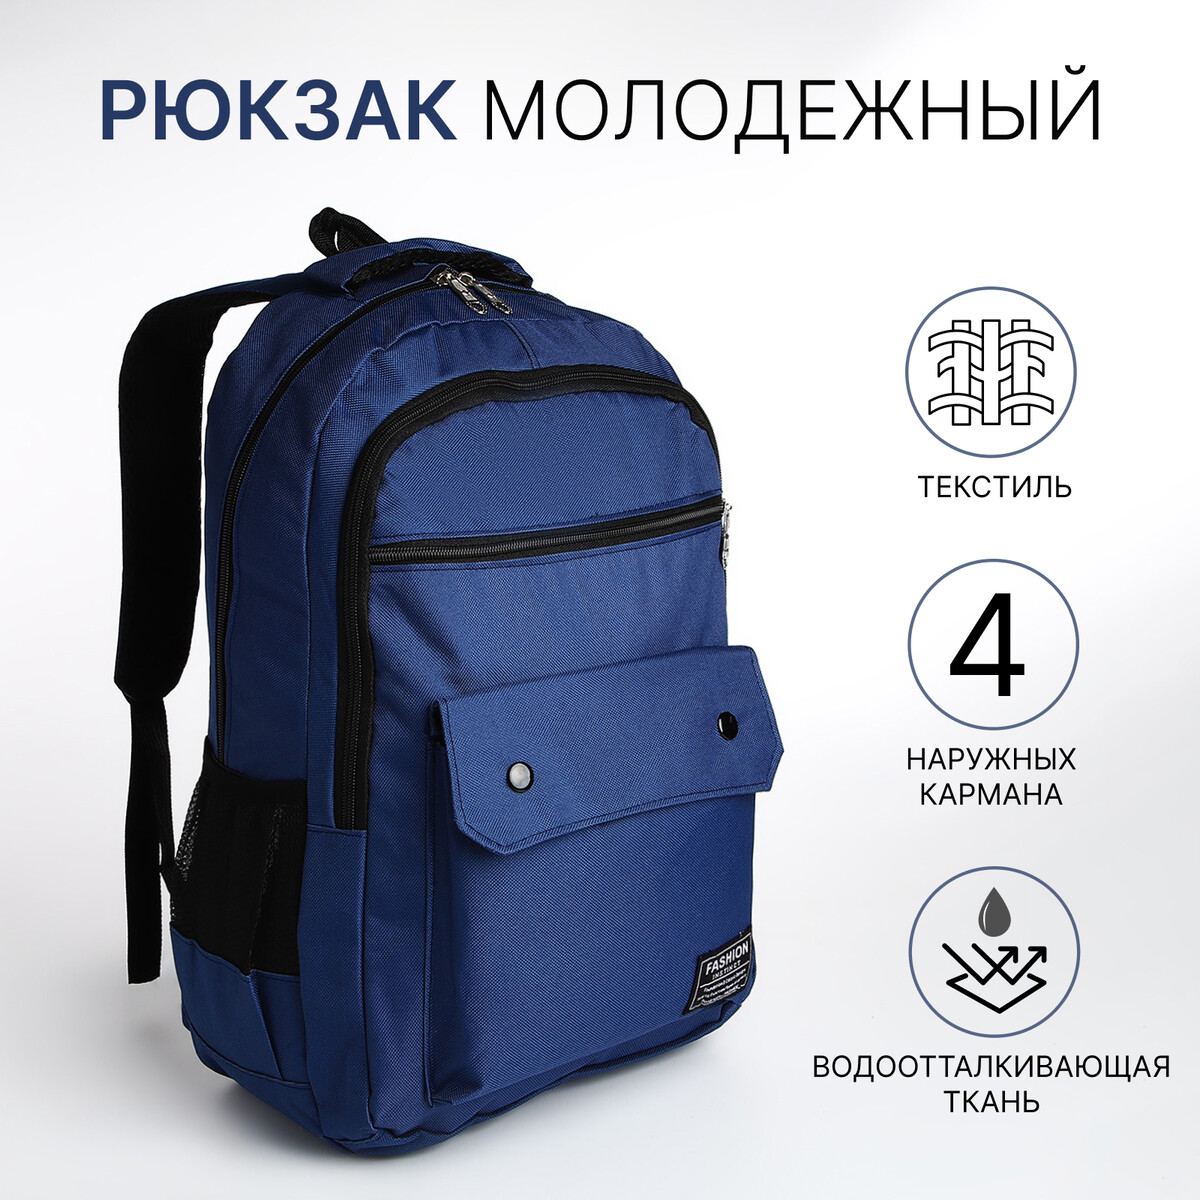 Рюкзак молодежный на молнии, 2 отдела, 4 кармана, цвет синий